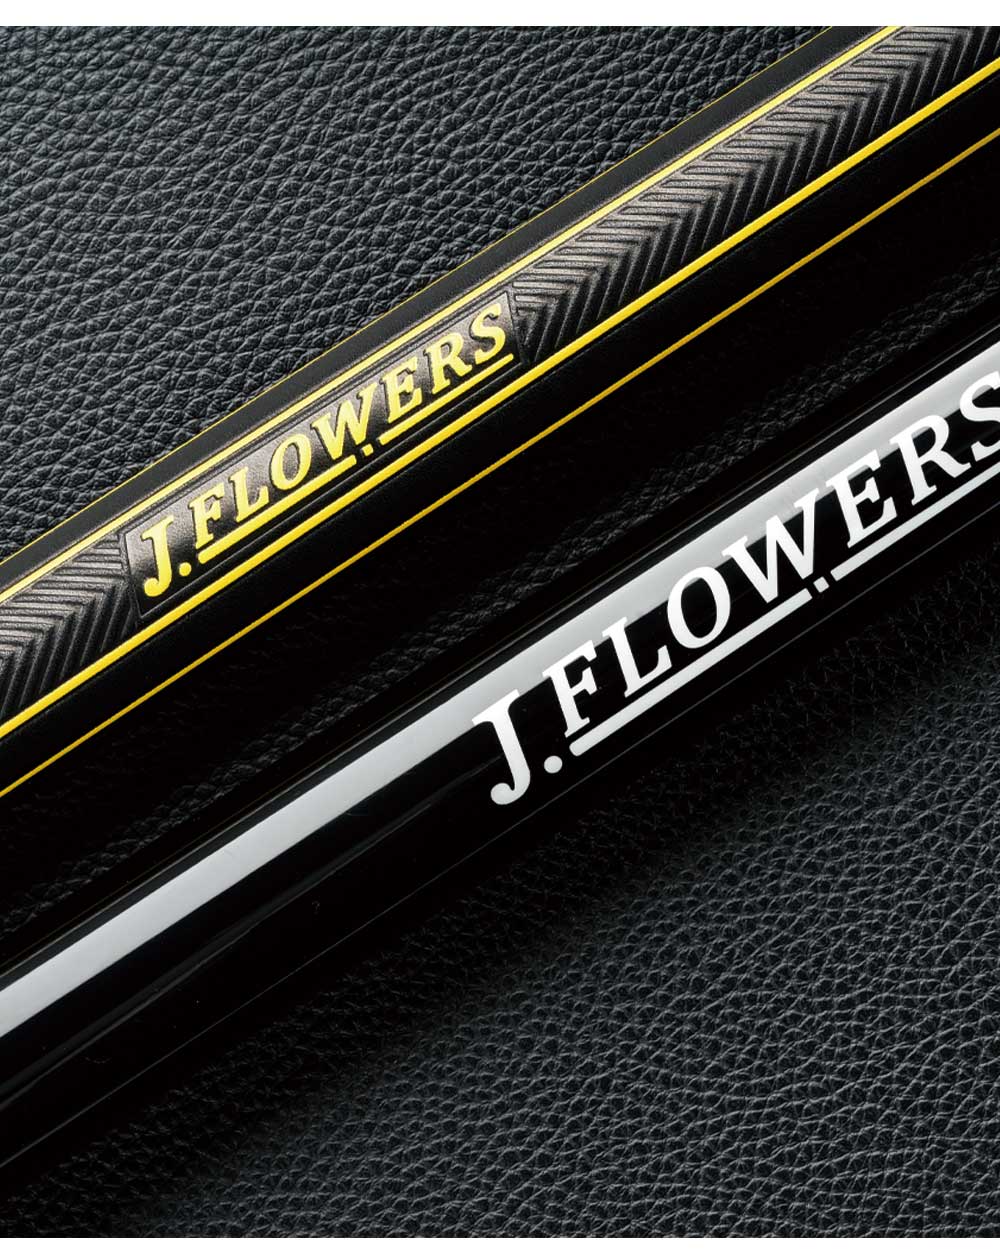 Jflowers BK BJ JP Billiards Punch Jump Cue Carbon Fiber Tecnologia Shaft